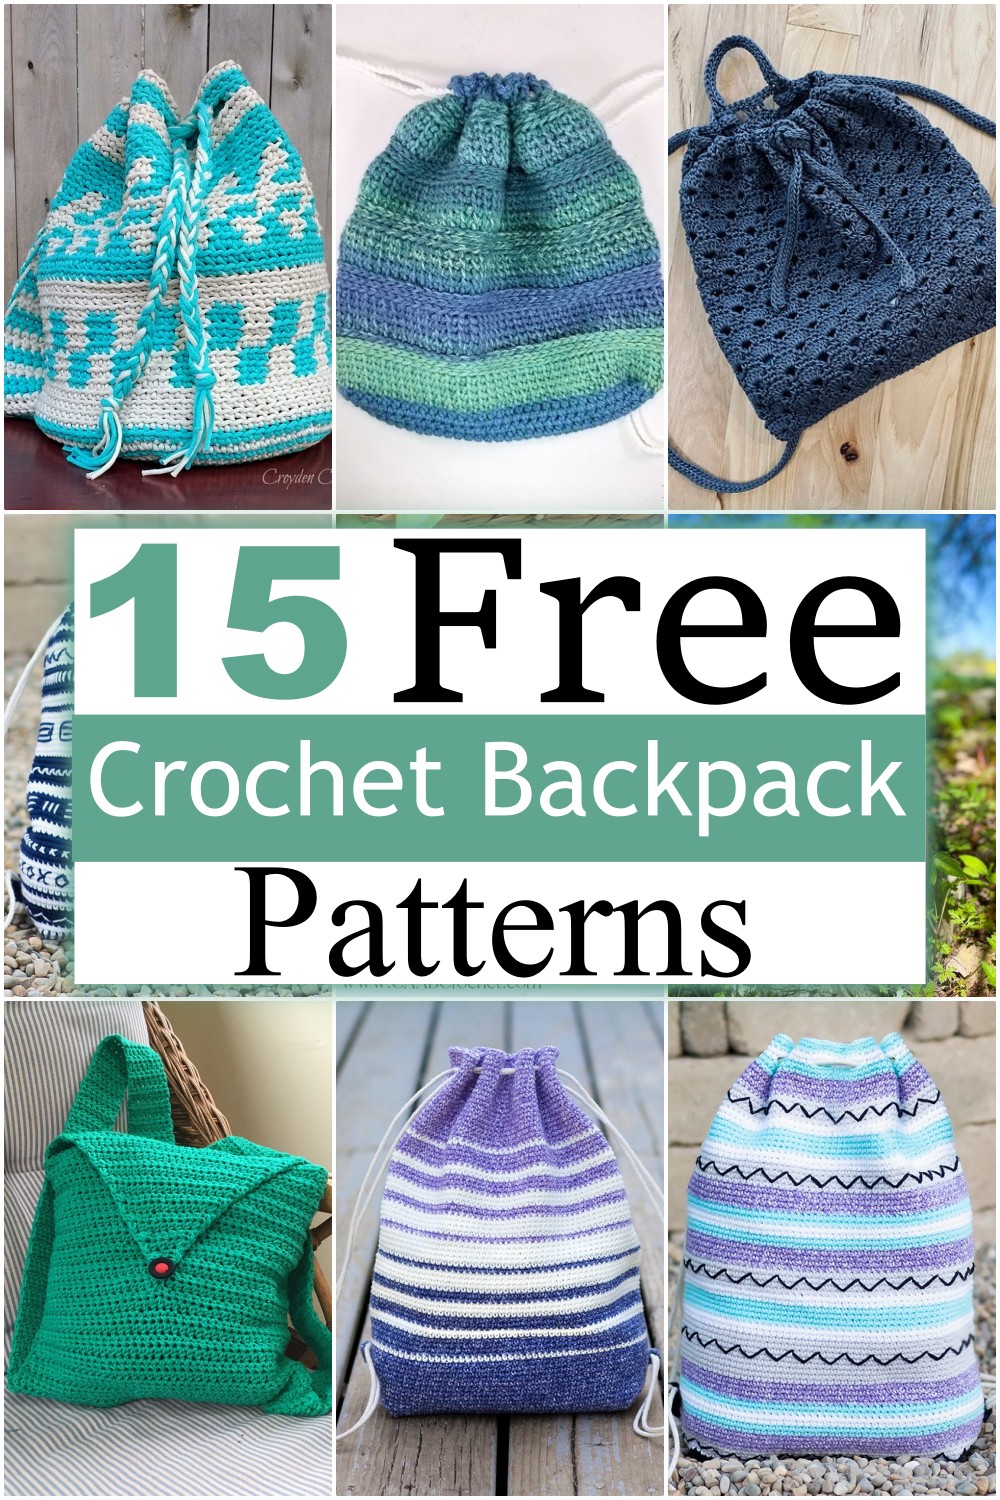  Crochet Backpack Patterns